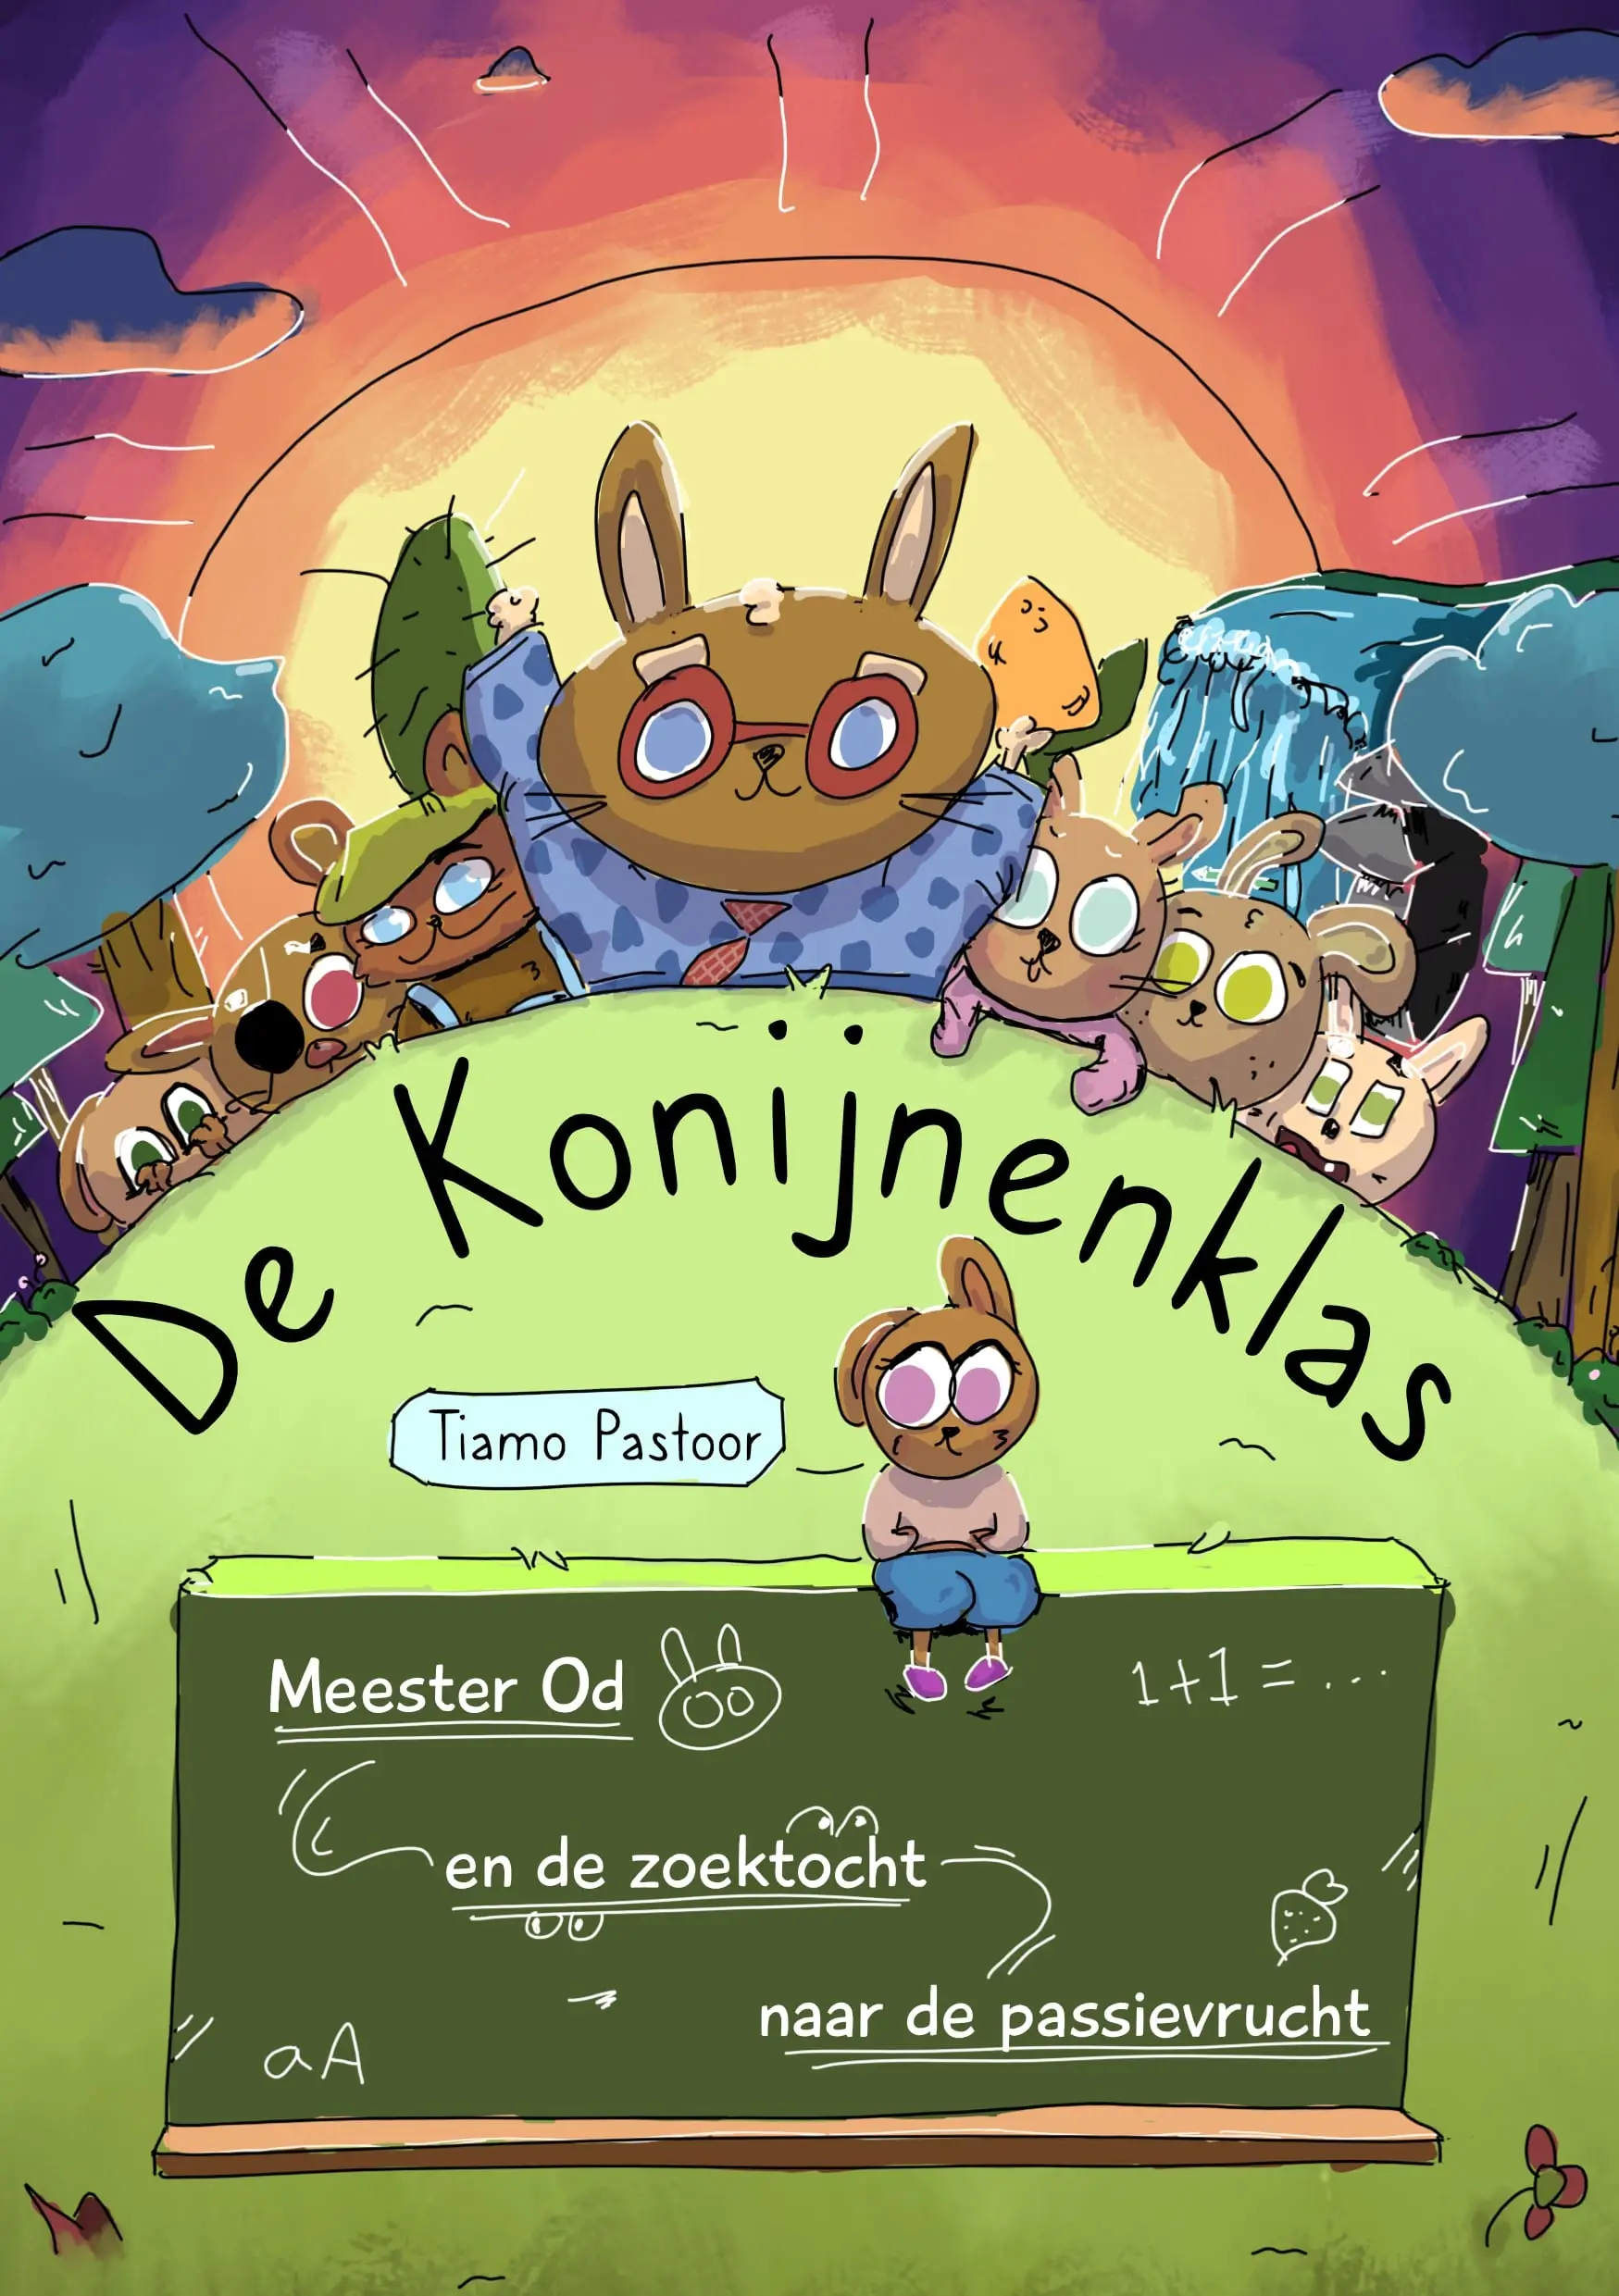 Header / Cover Image for 'De Konijnenklas'